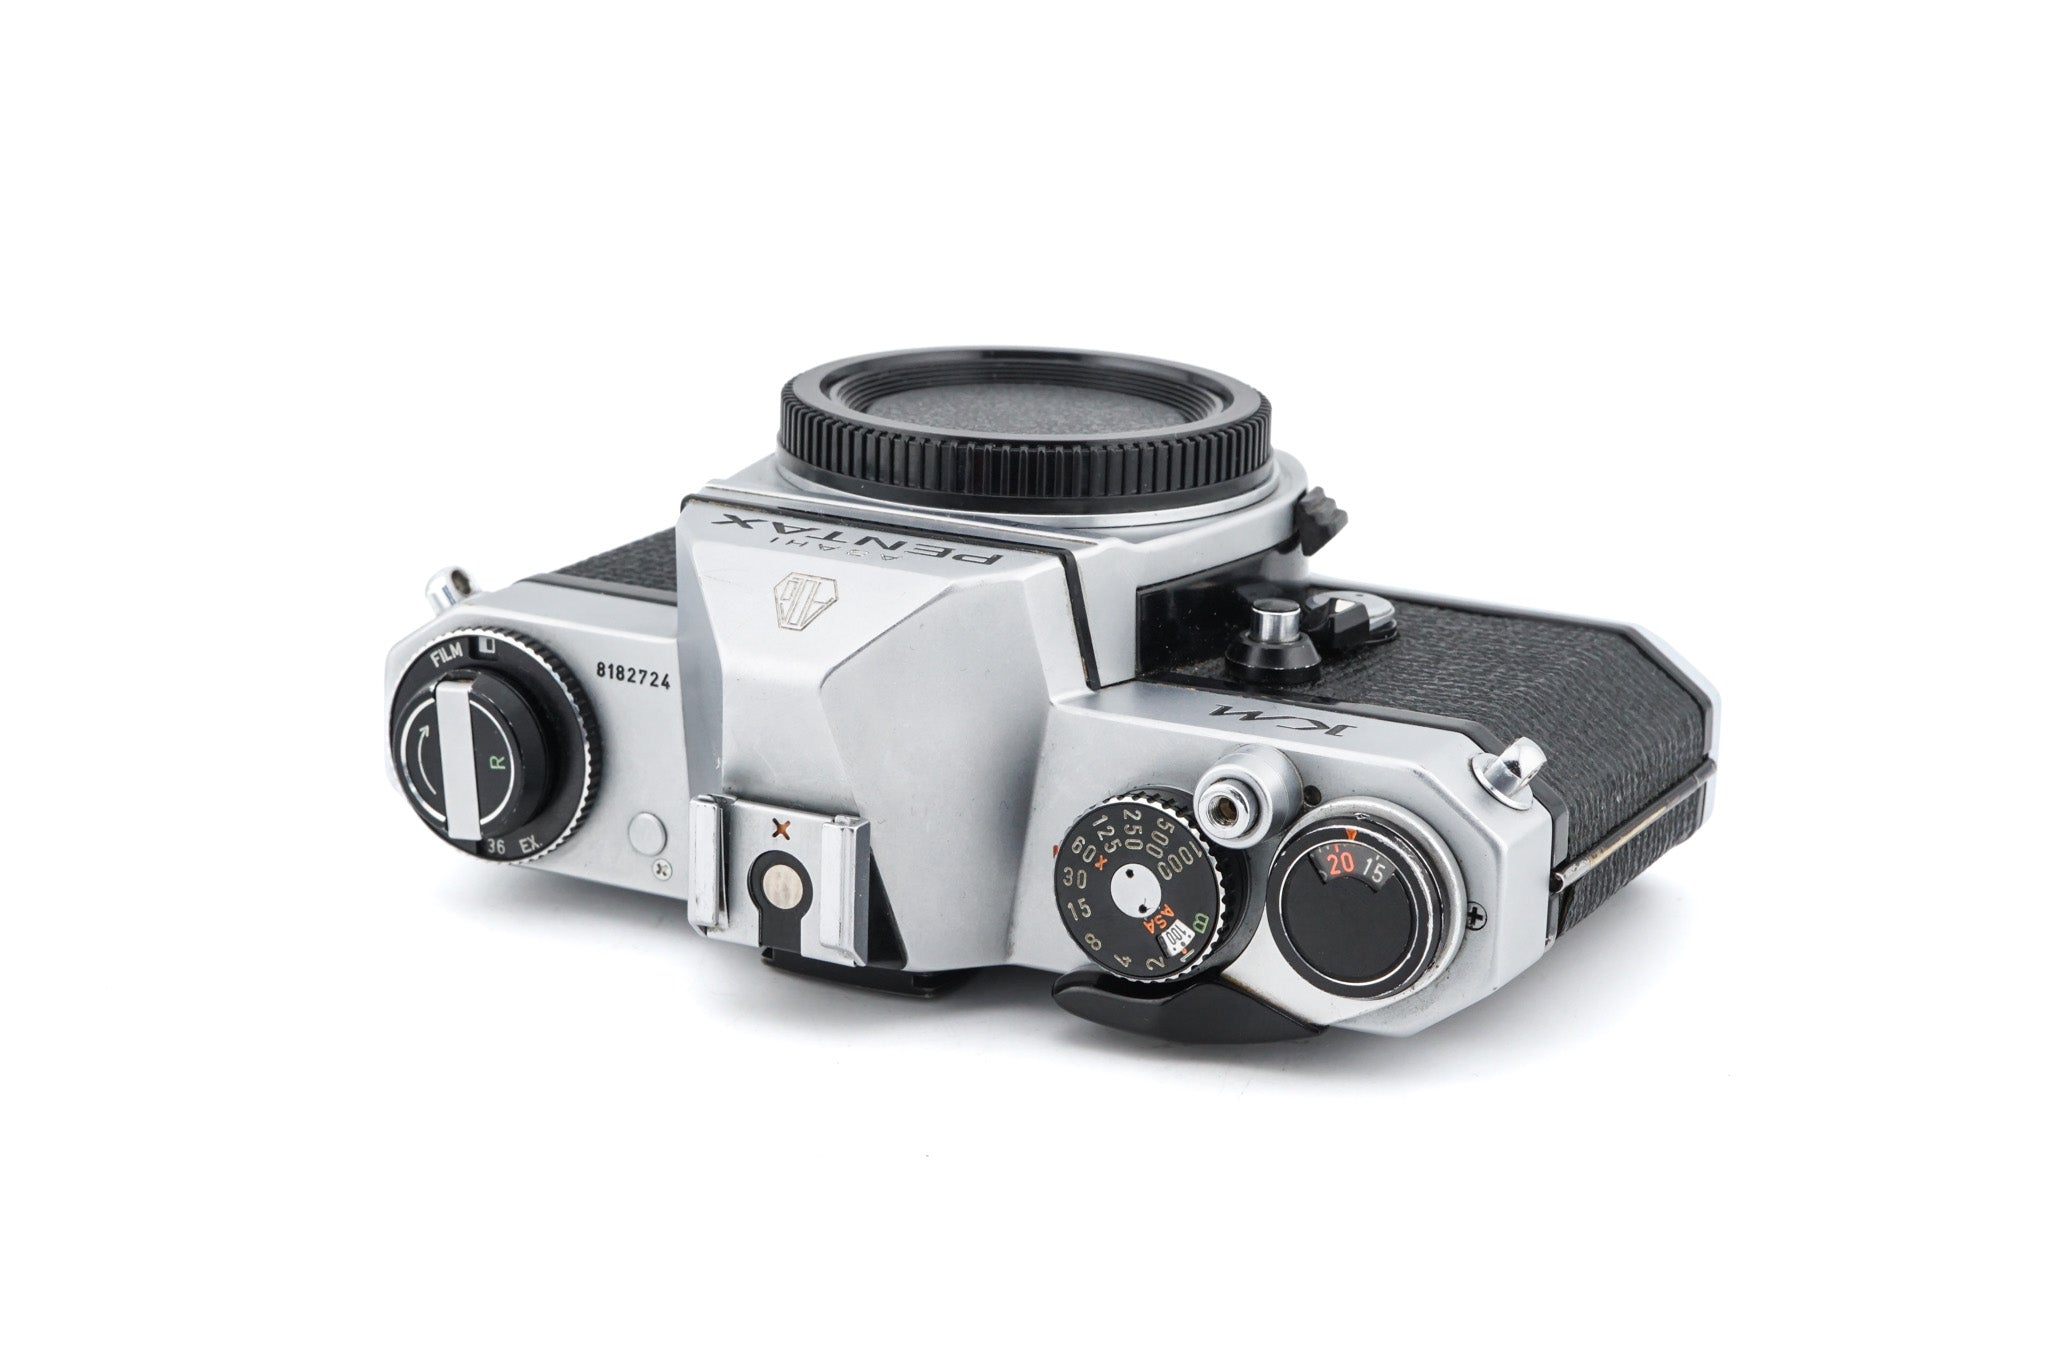 Pentax KM – Kamerastore